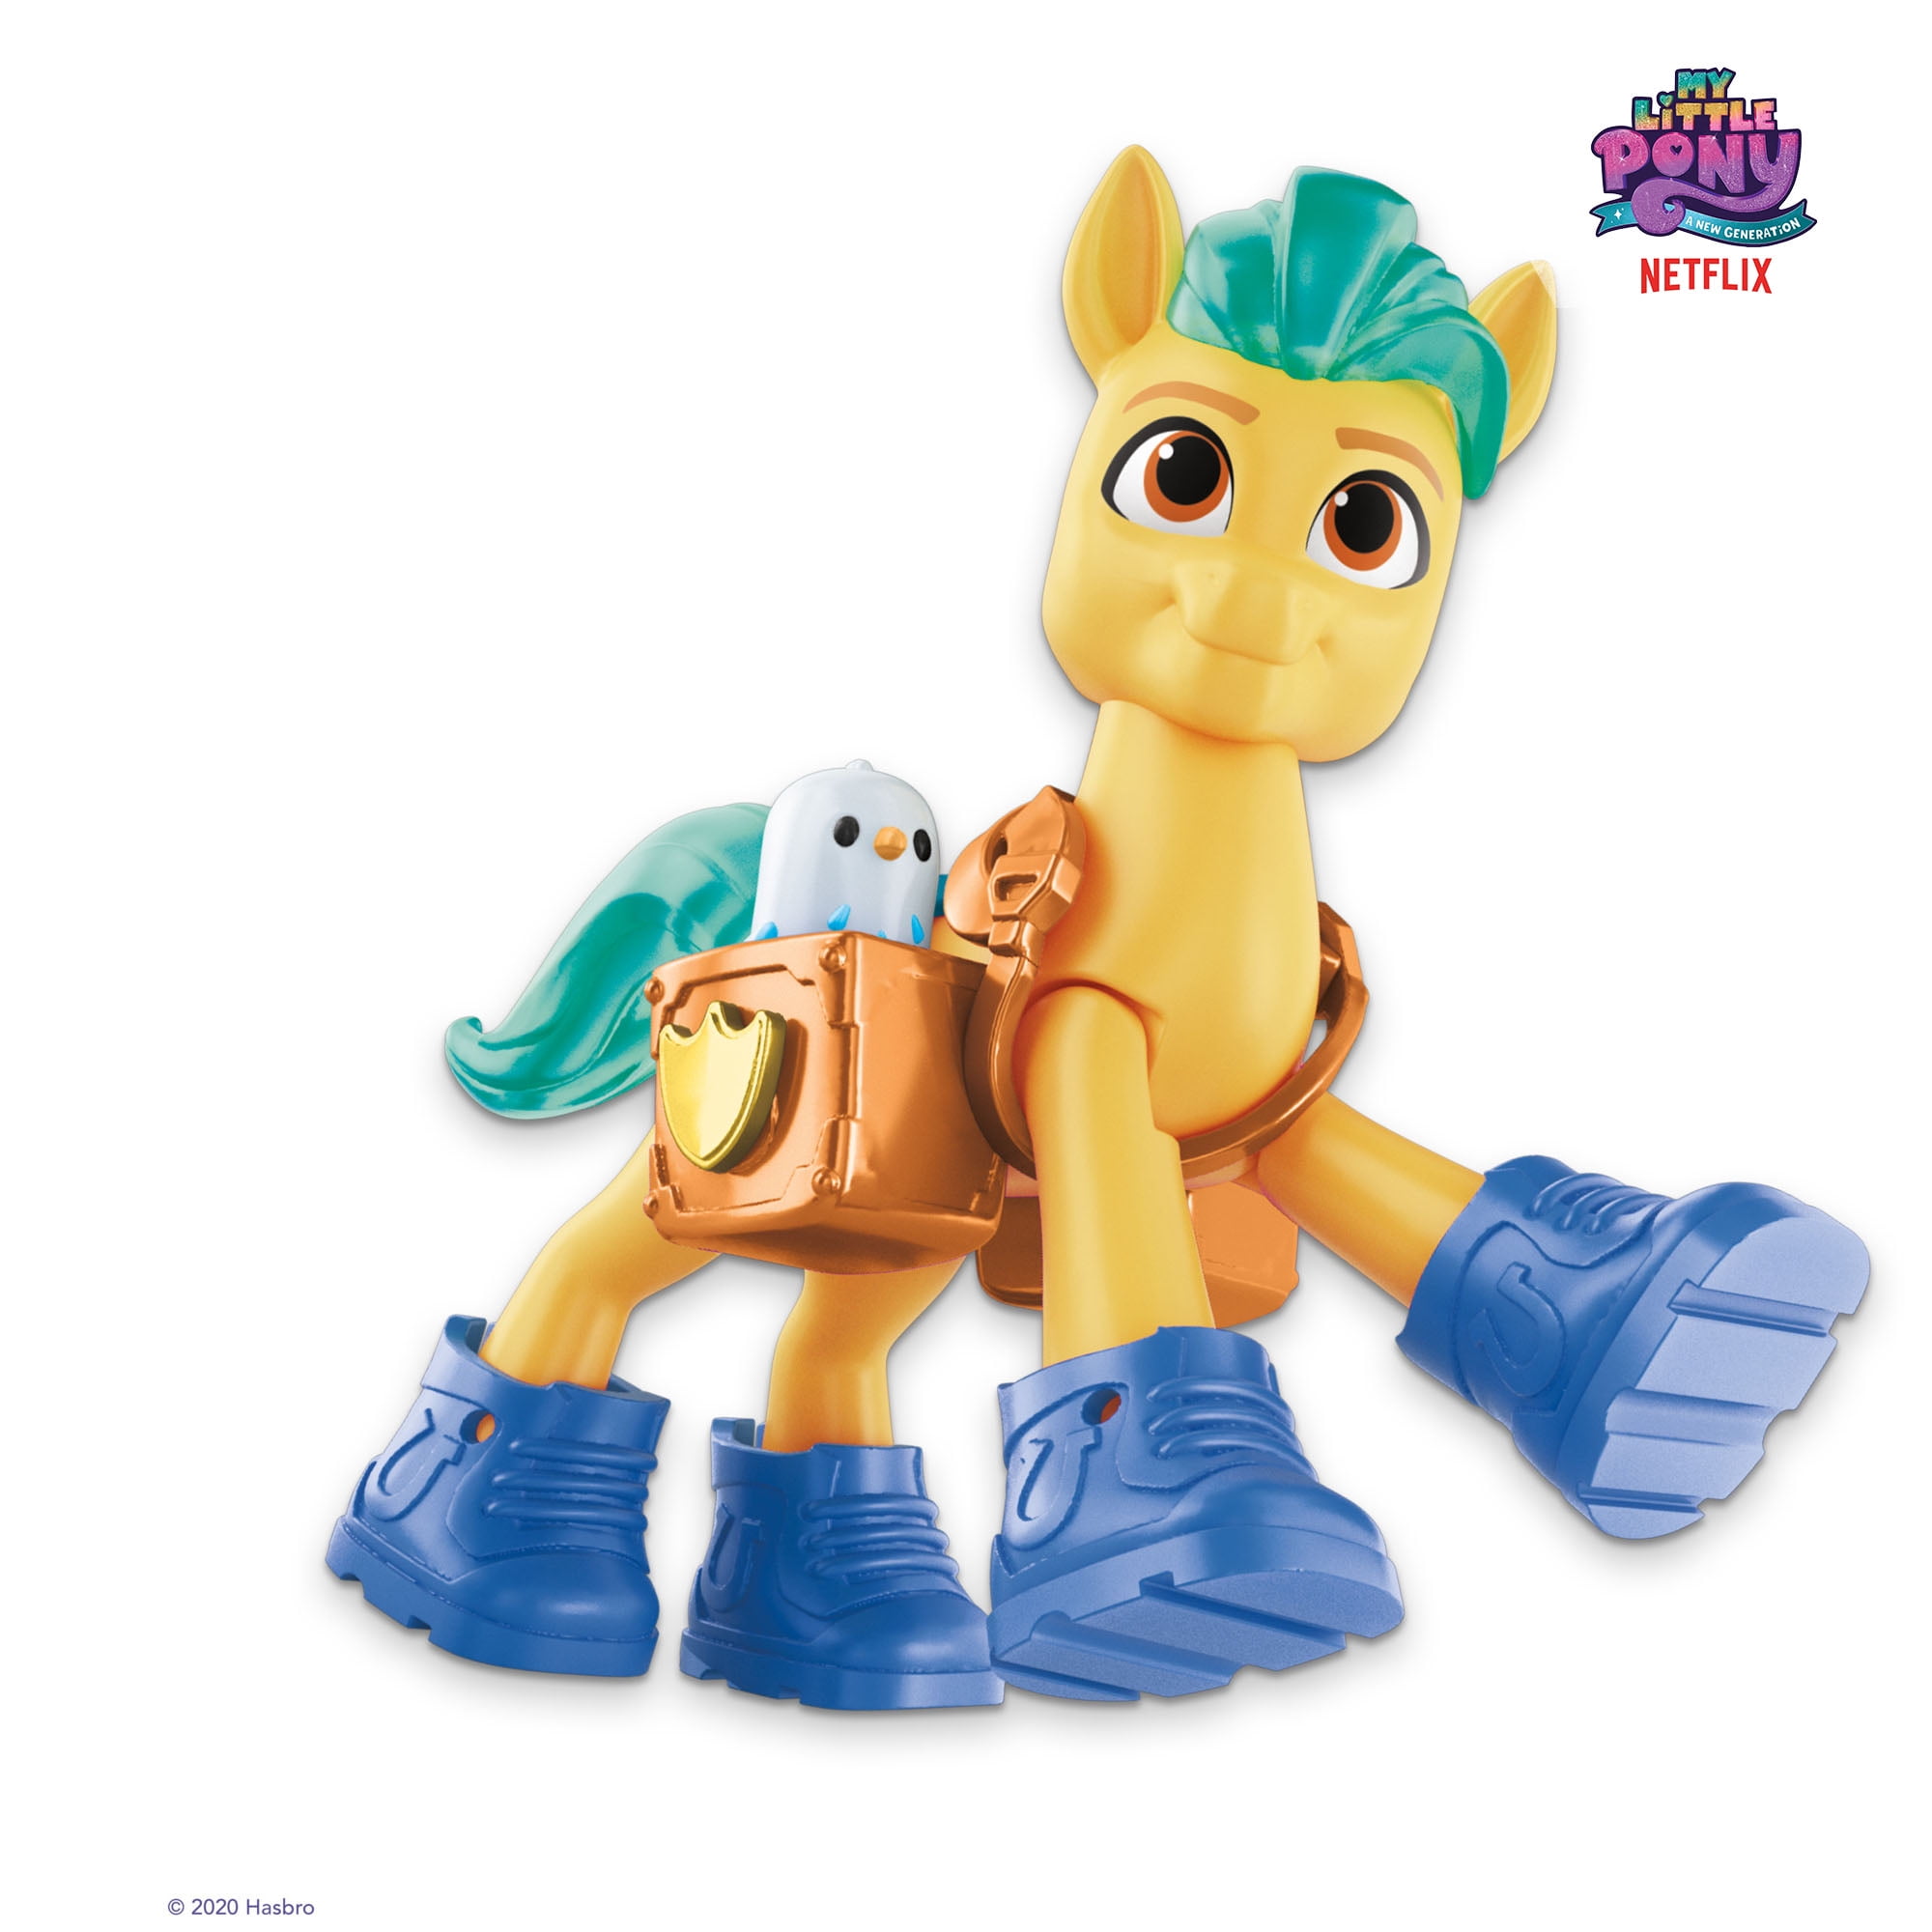 My Little Pony: A New Generation Crystal Adventure Princess Petals - My Little  Pony